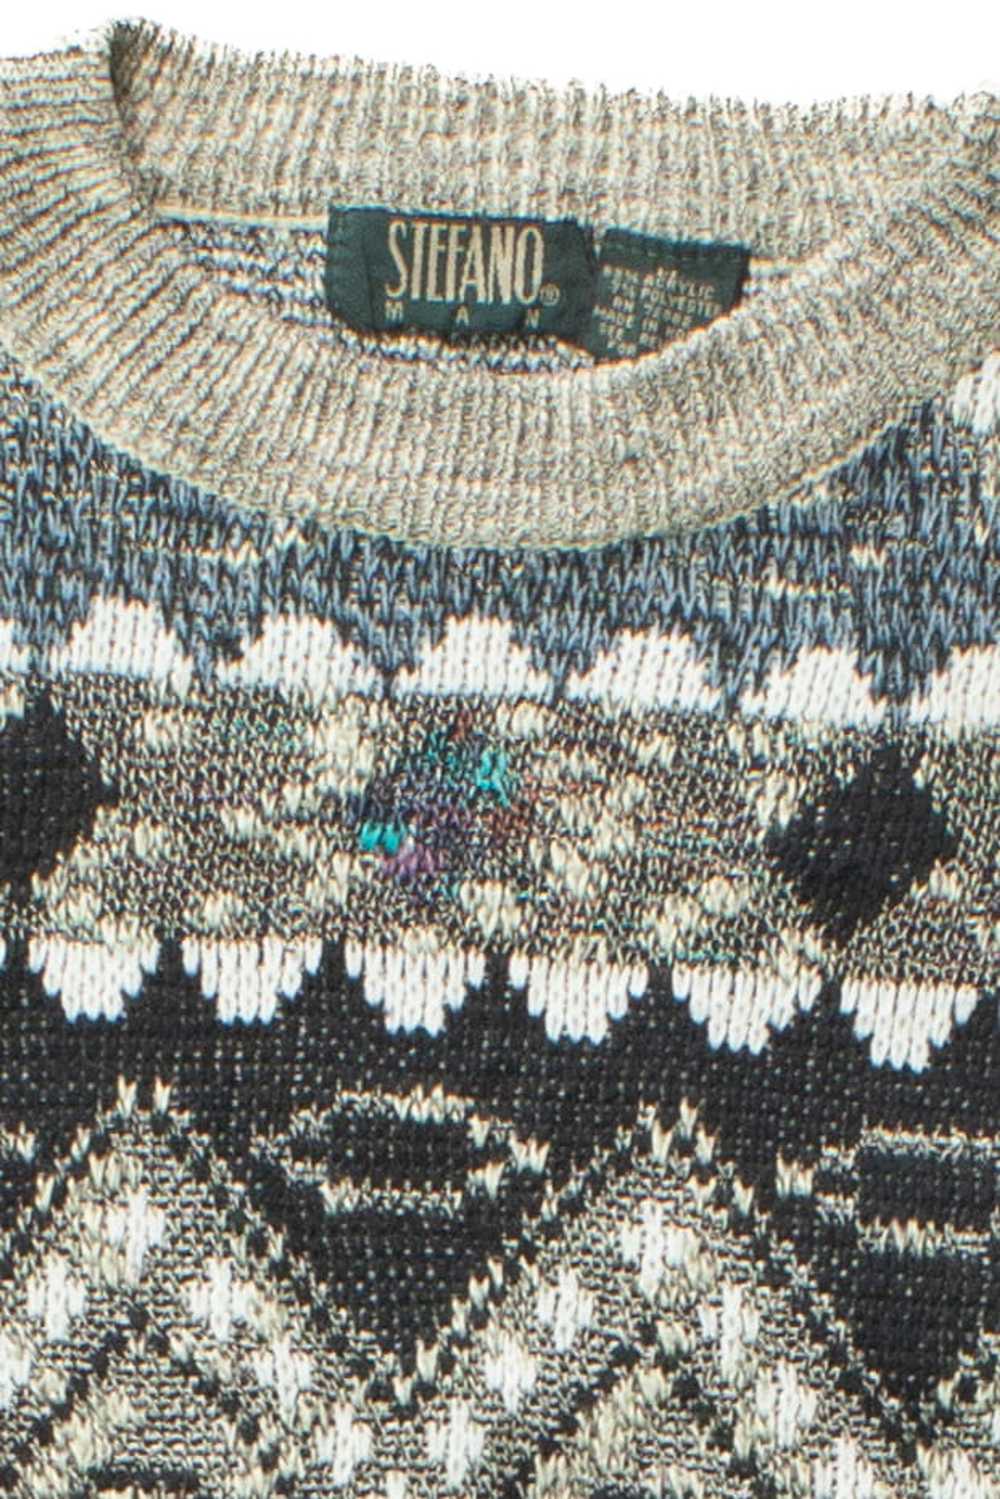 Vintage Stefano 80s Sweater 4441 - image 3